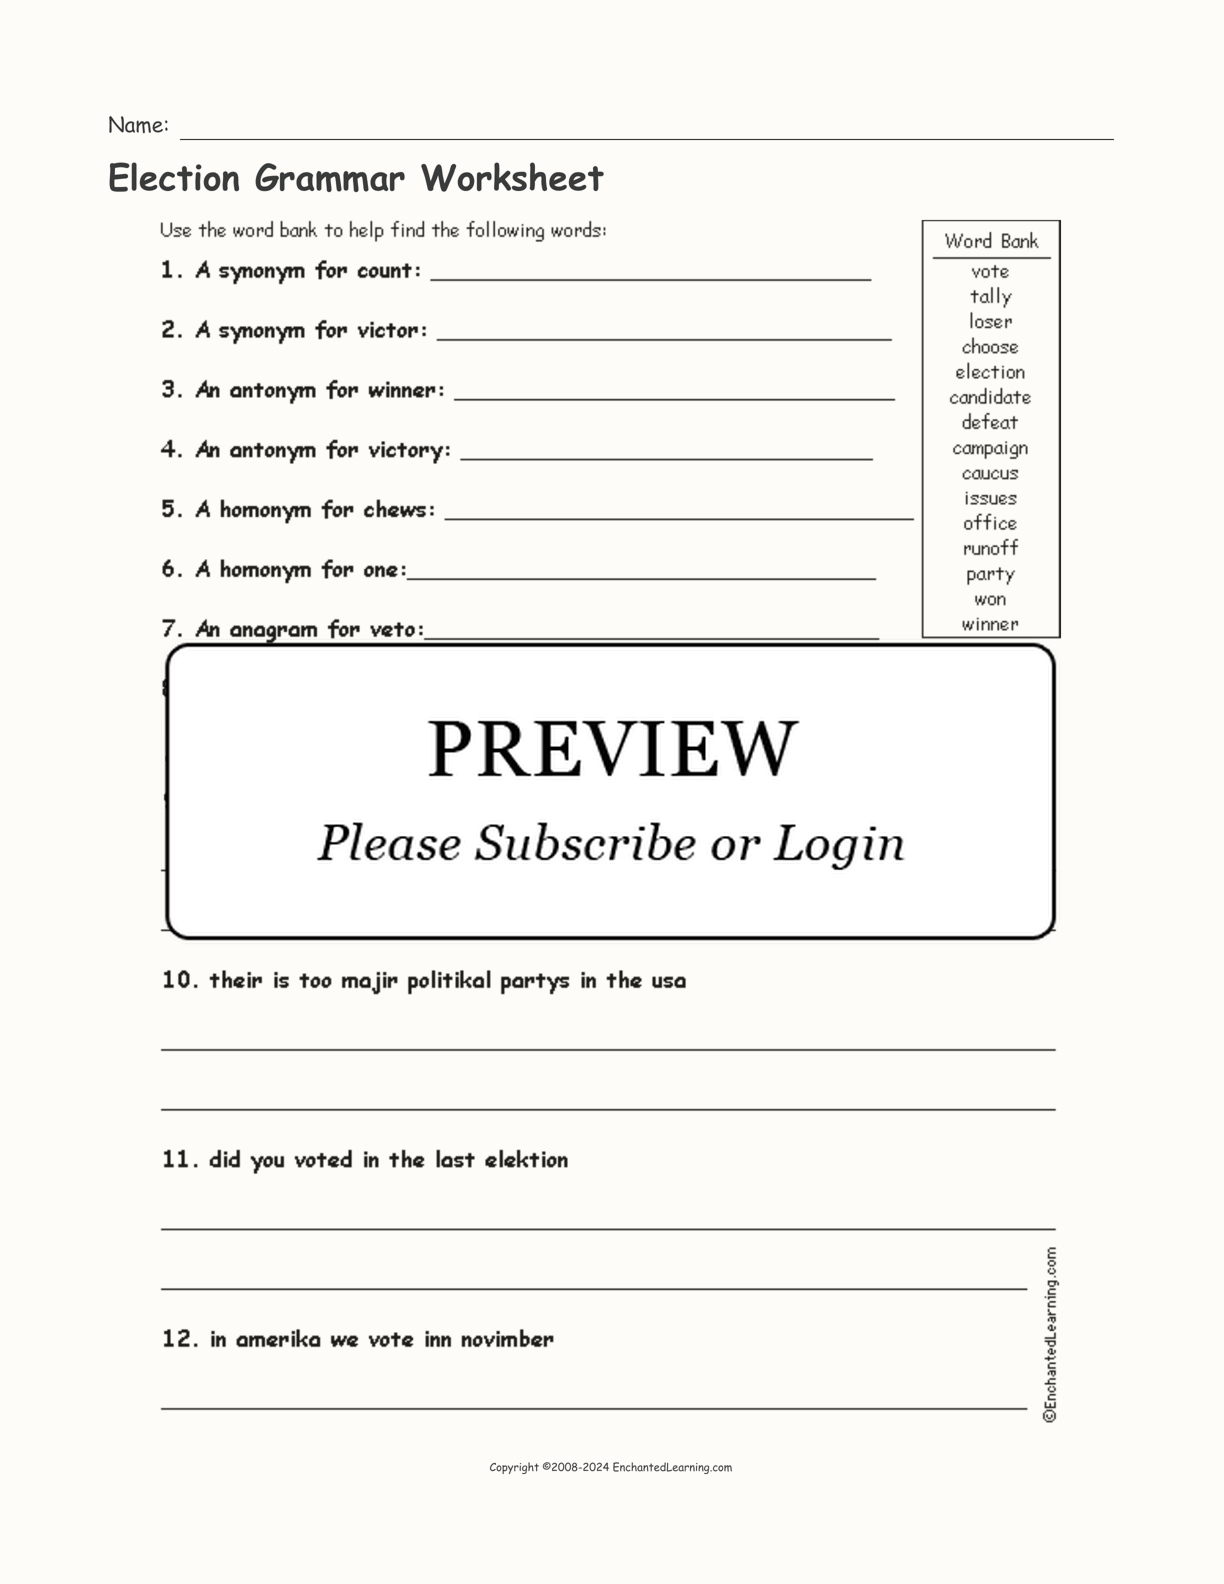 Election Grammar Worksheet interactive worksheet page 1